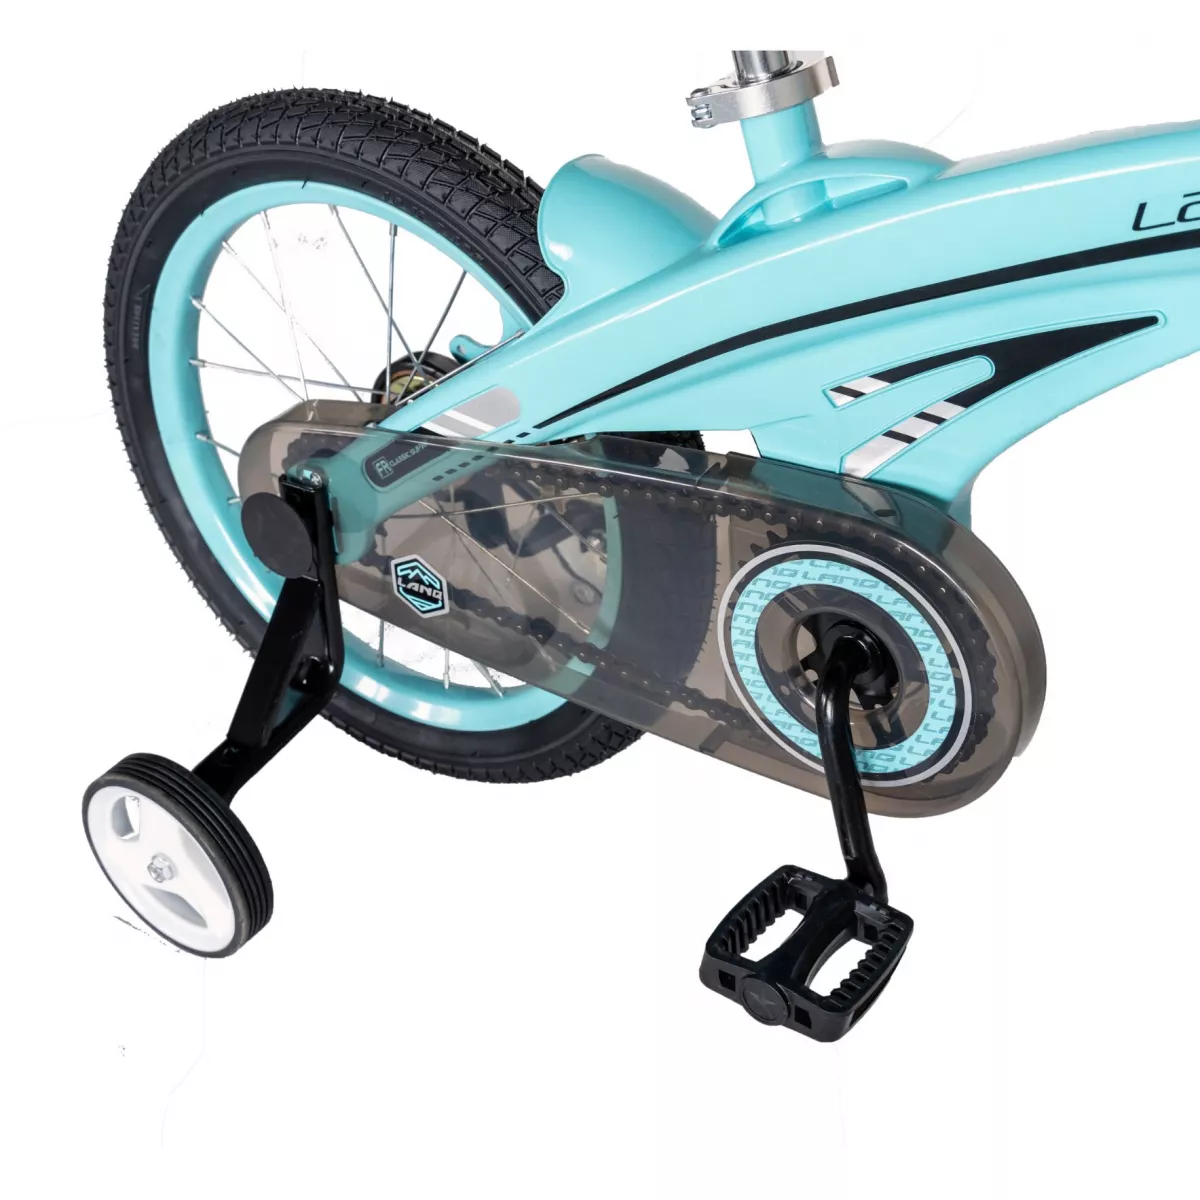 Bicicleta copii W1639D, roata 16", cadru aliaj magneziu, frana C-Brake, roti ajutatoare, 4-6 ani, albastru/negru